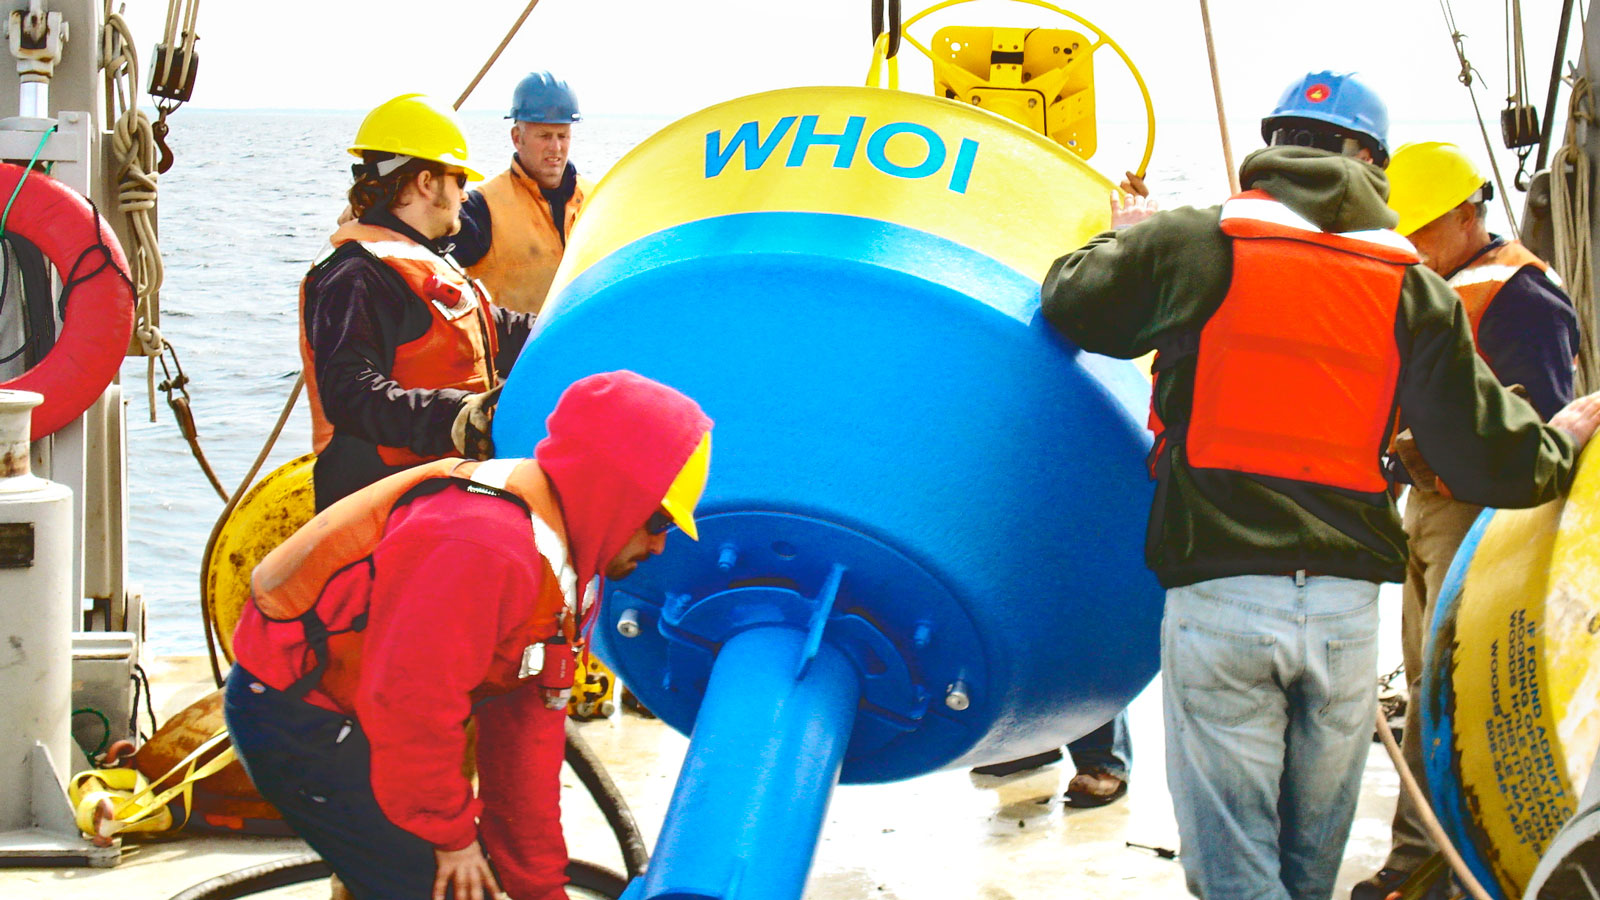 Deploying a sound buoy into the ocean